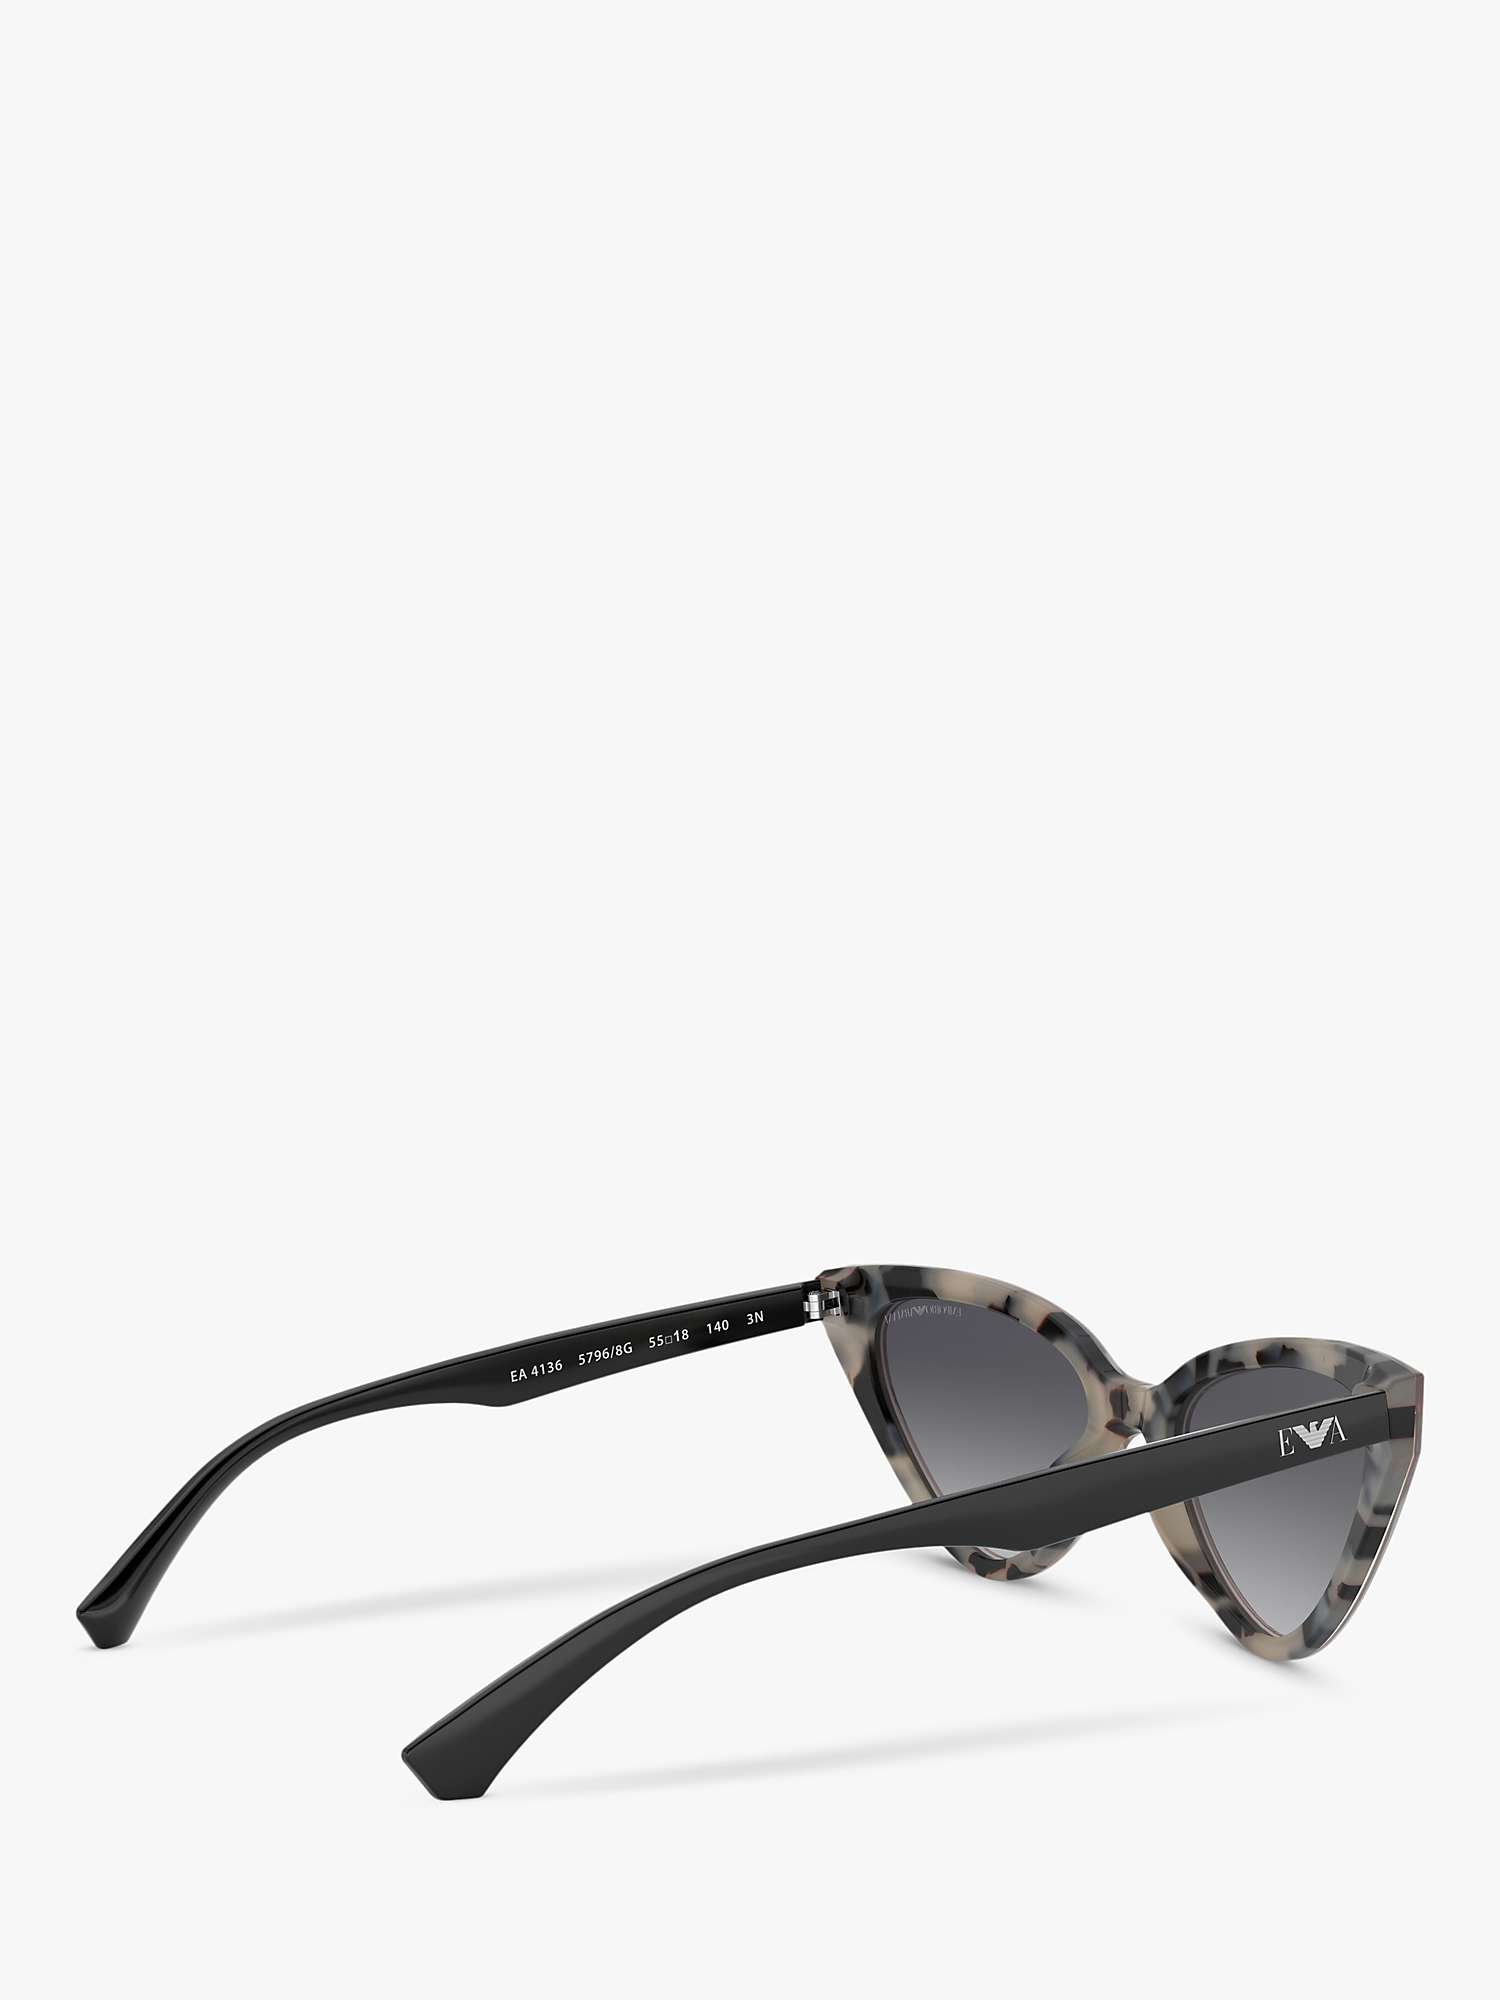 Buy Emporio Armani EA4136 Women's Cat's Eye Sunglasses Online at johnlewis.com